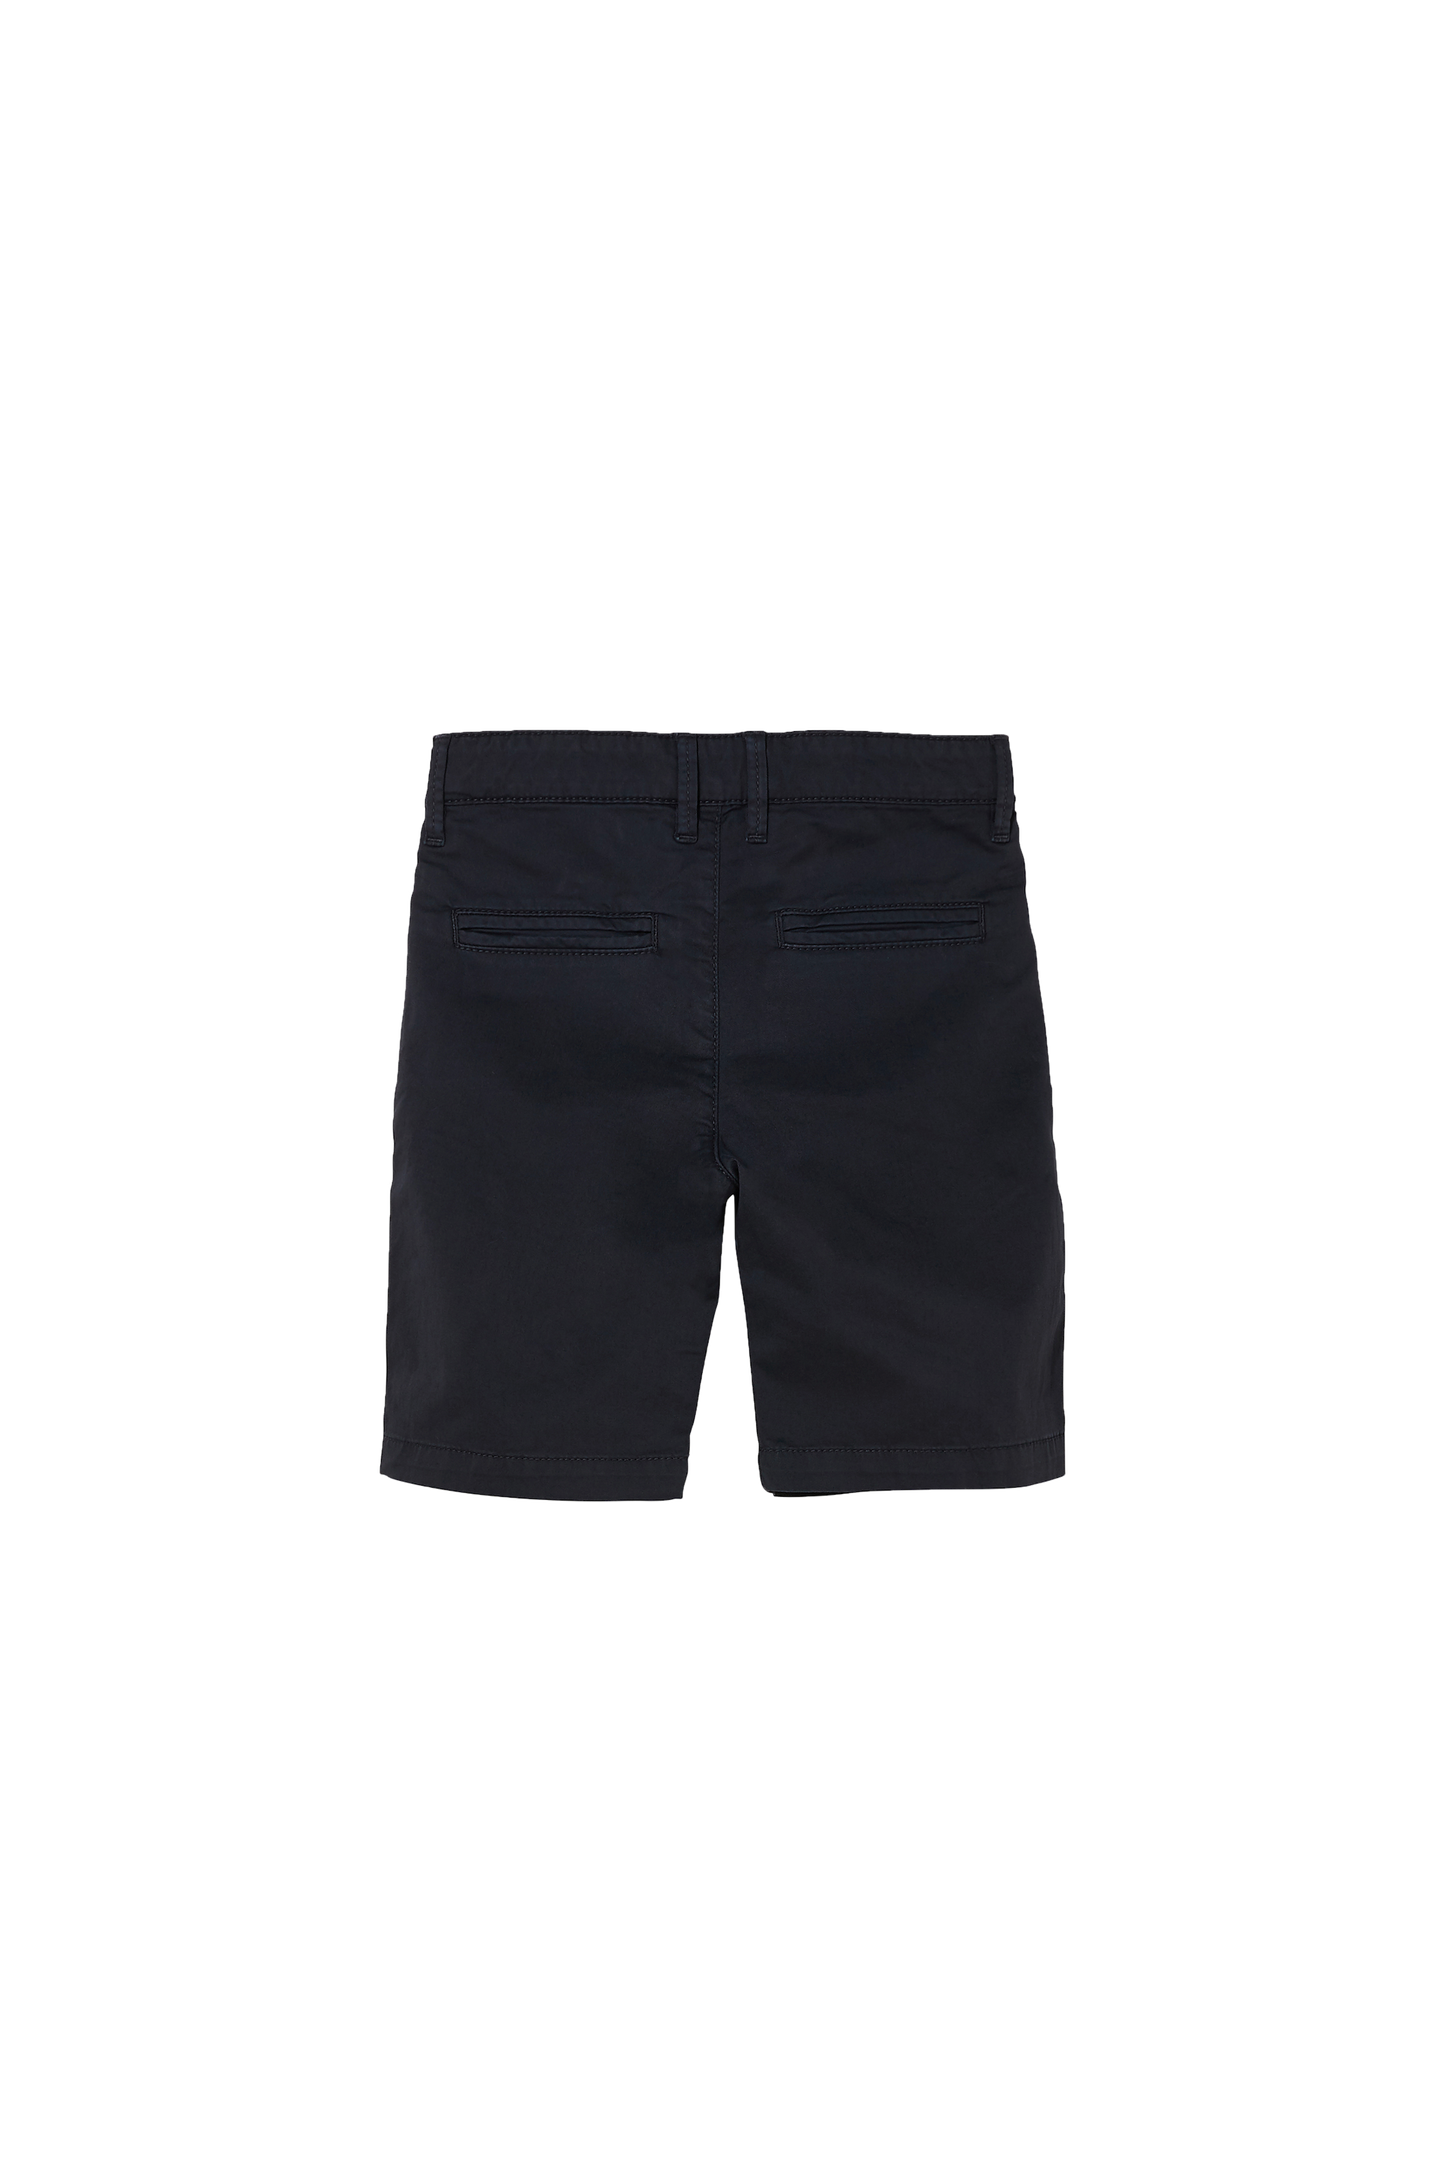 ALLEN Ash Black - Chino Fit Bermuda Shorts